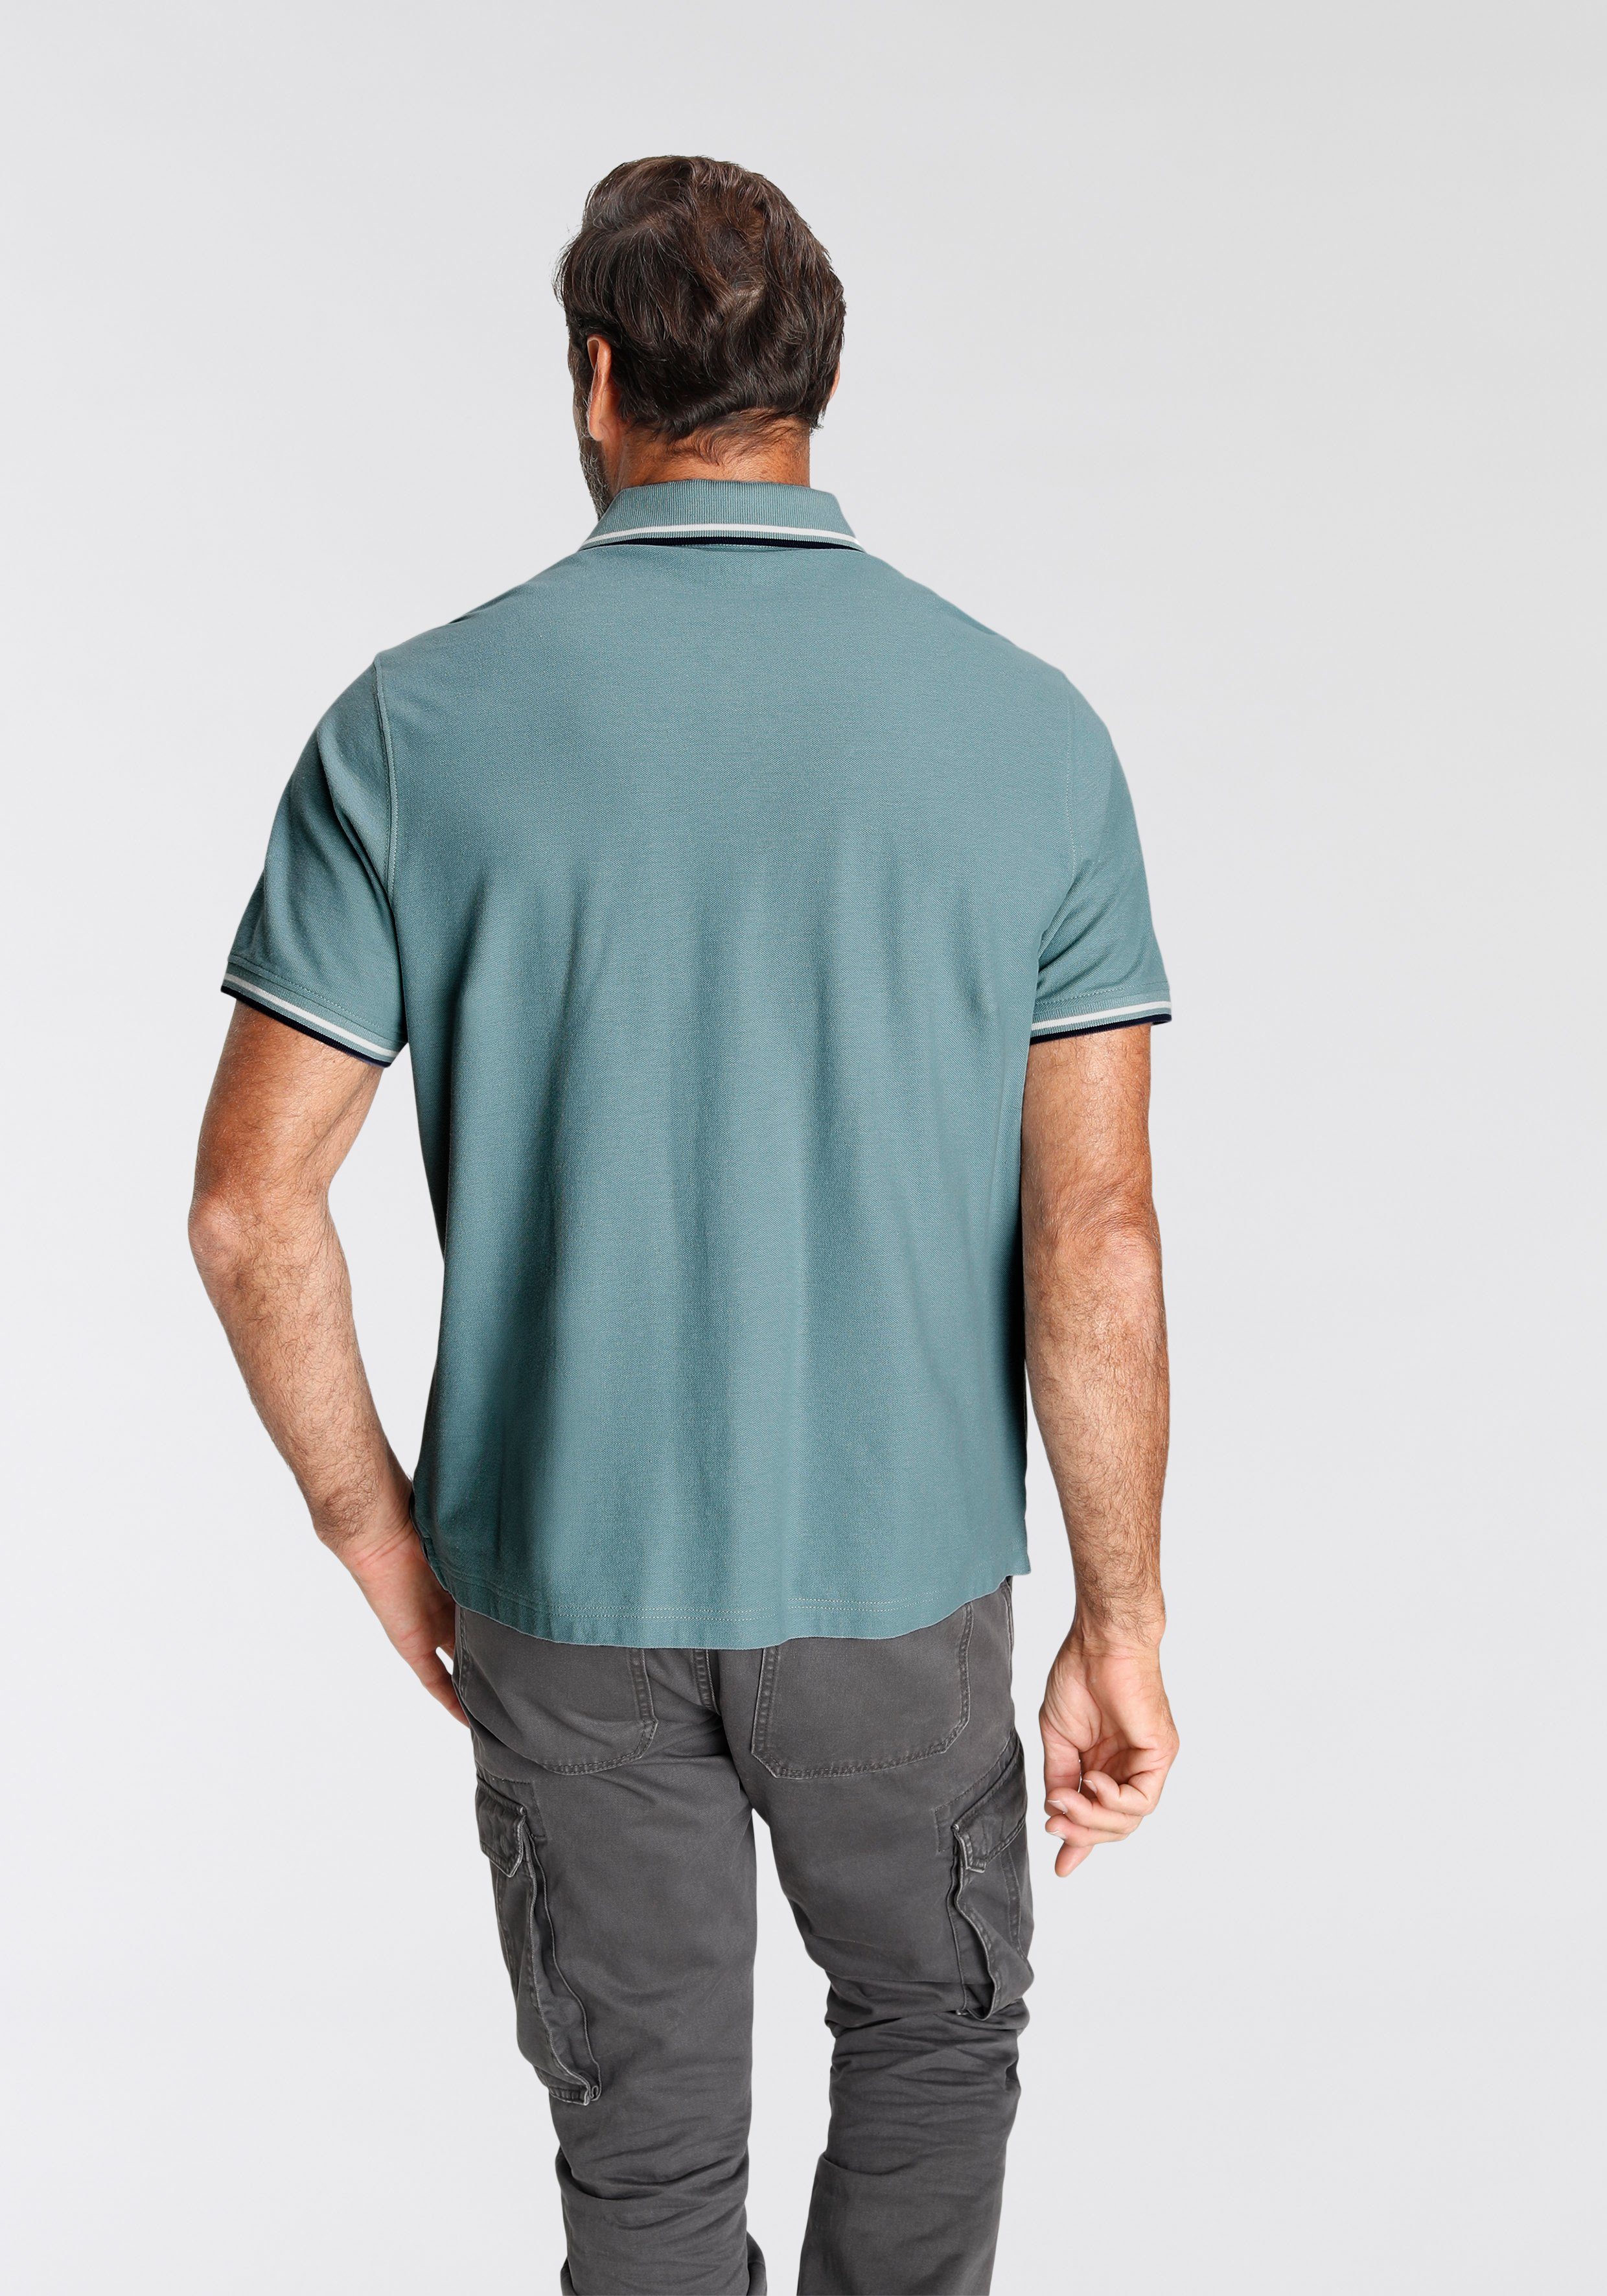 Man's World Poloshirt Mit Print an der rauchblau Schulter